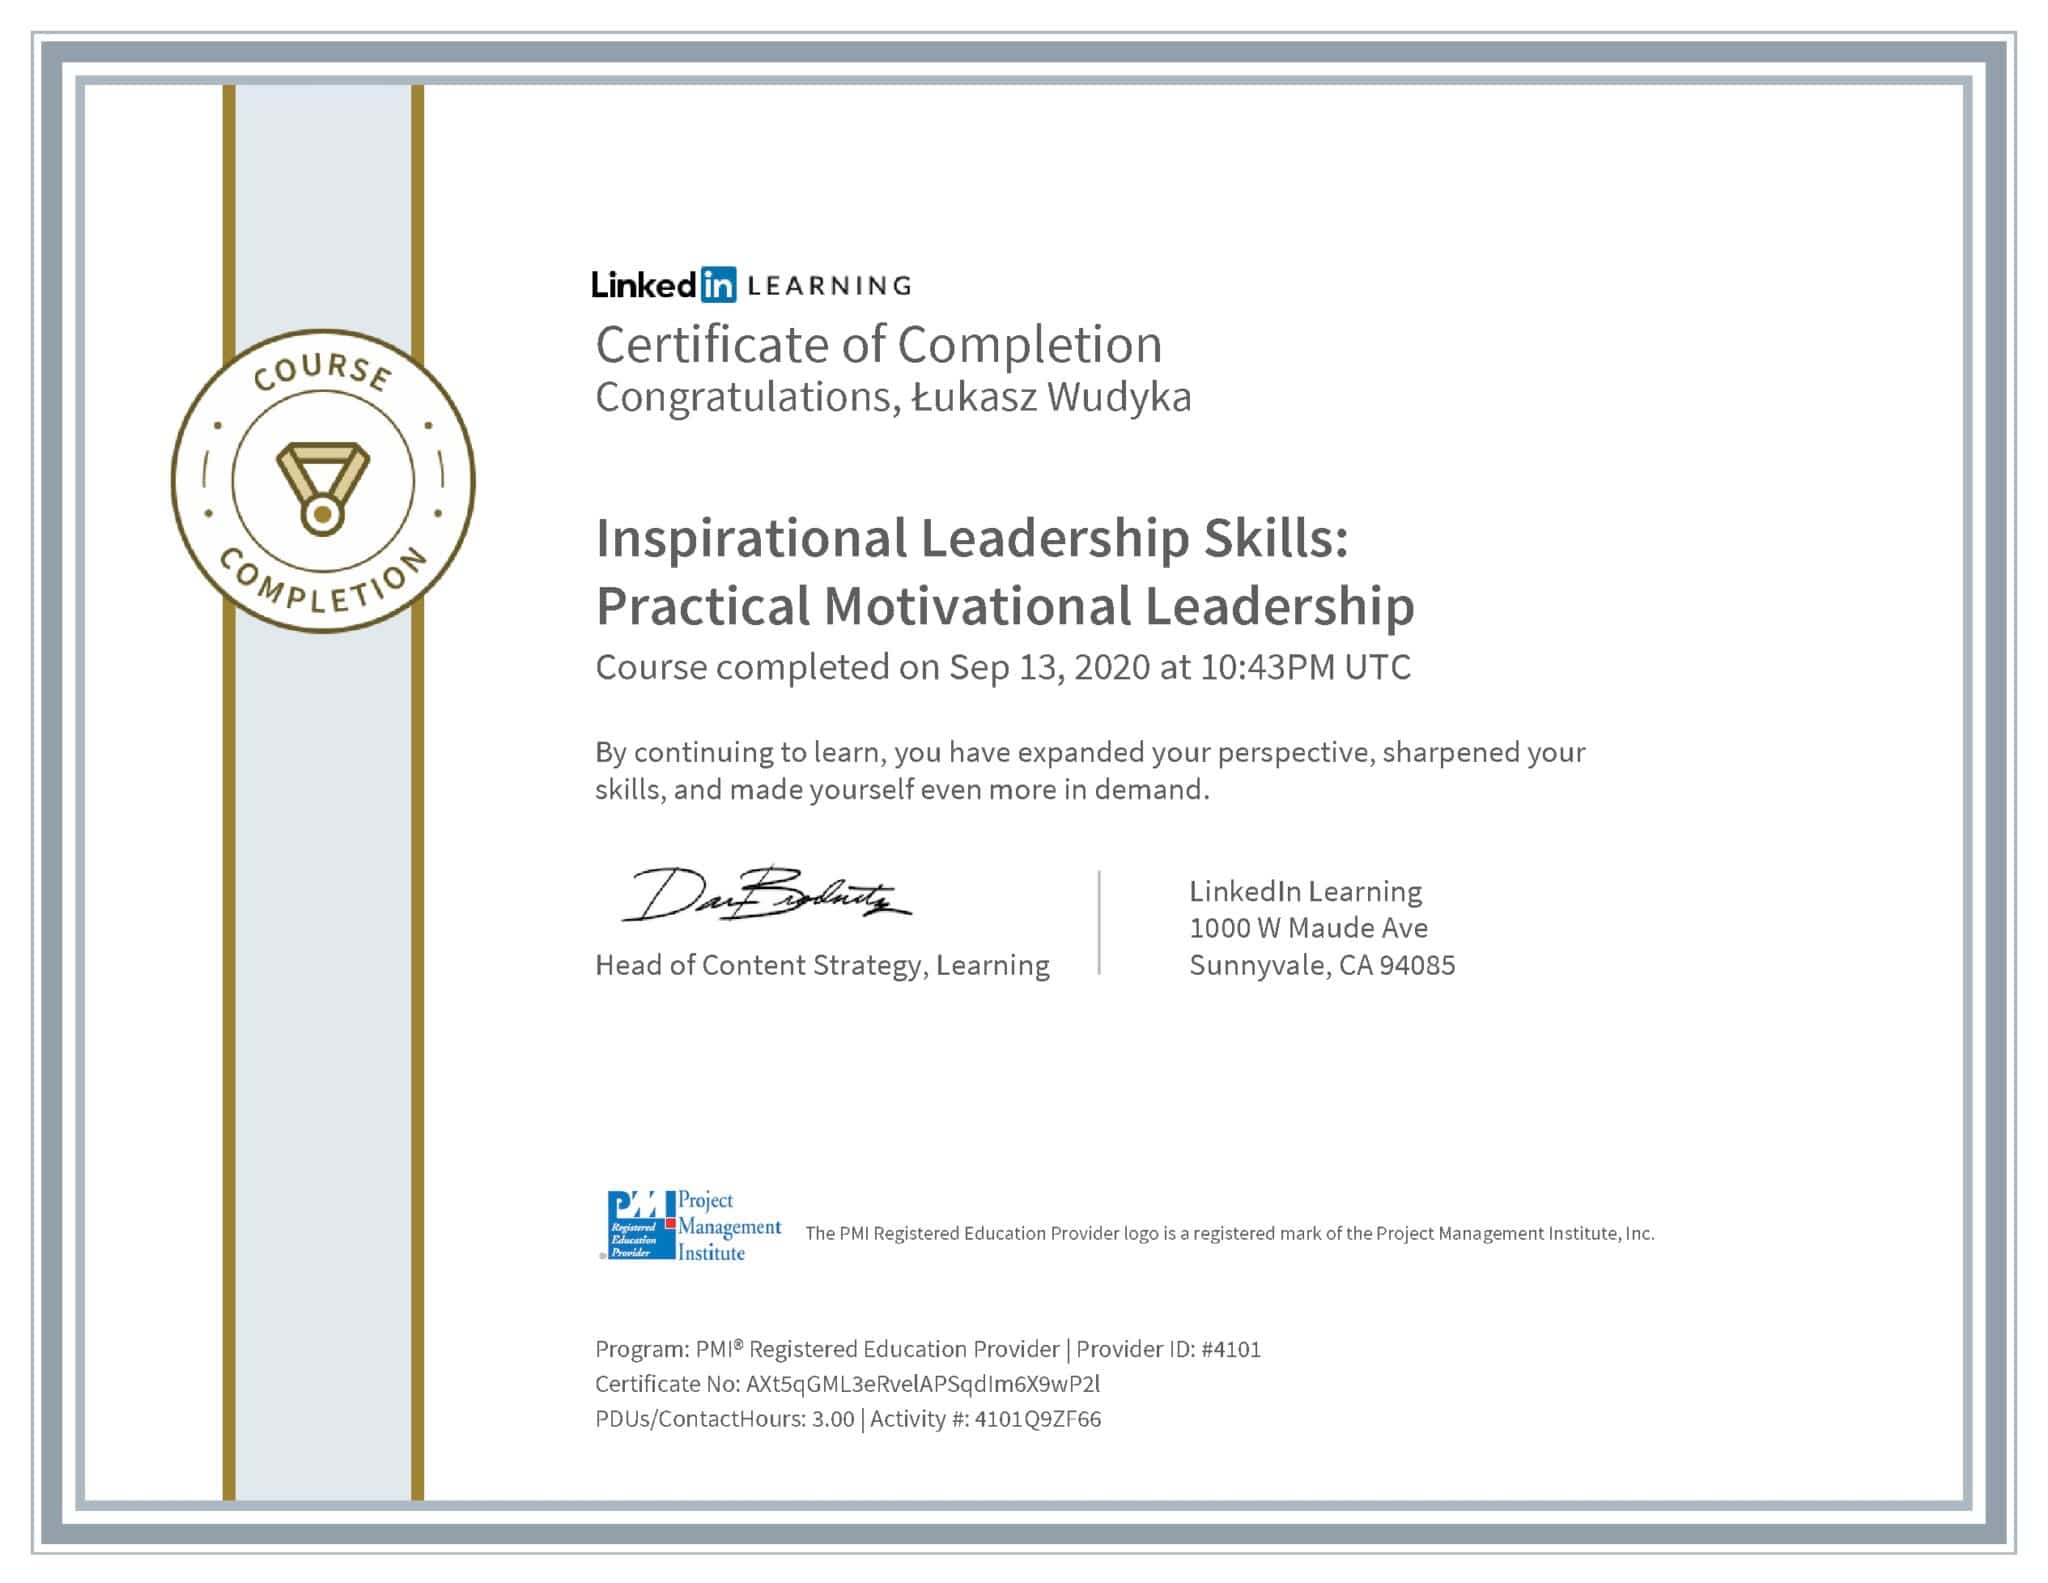 Łukasz Wudyka certyfikat LinkedIn Inspirational Leadership Skills: Practical Motivational Leadership PMI